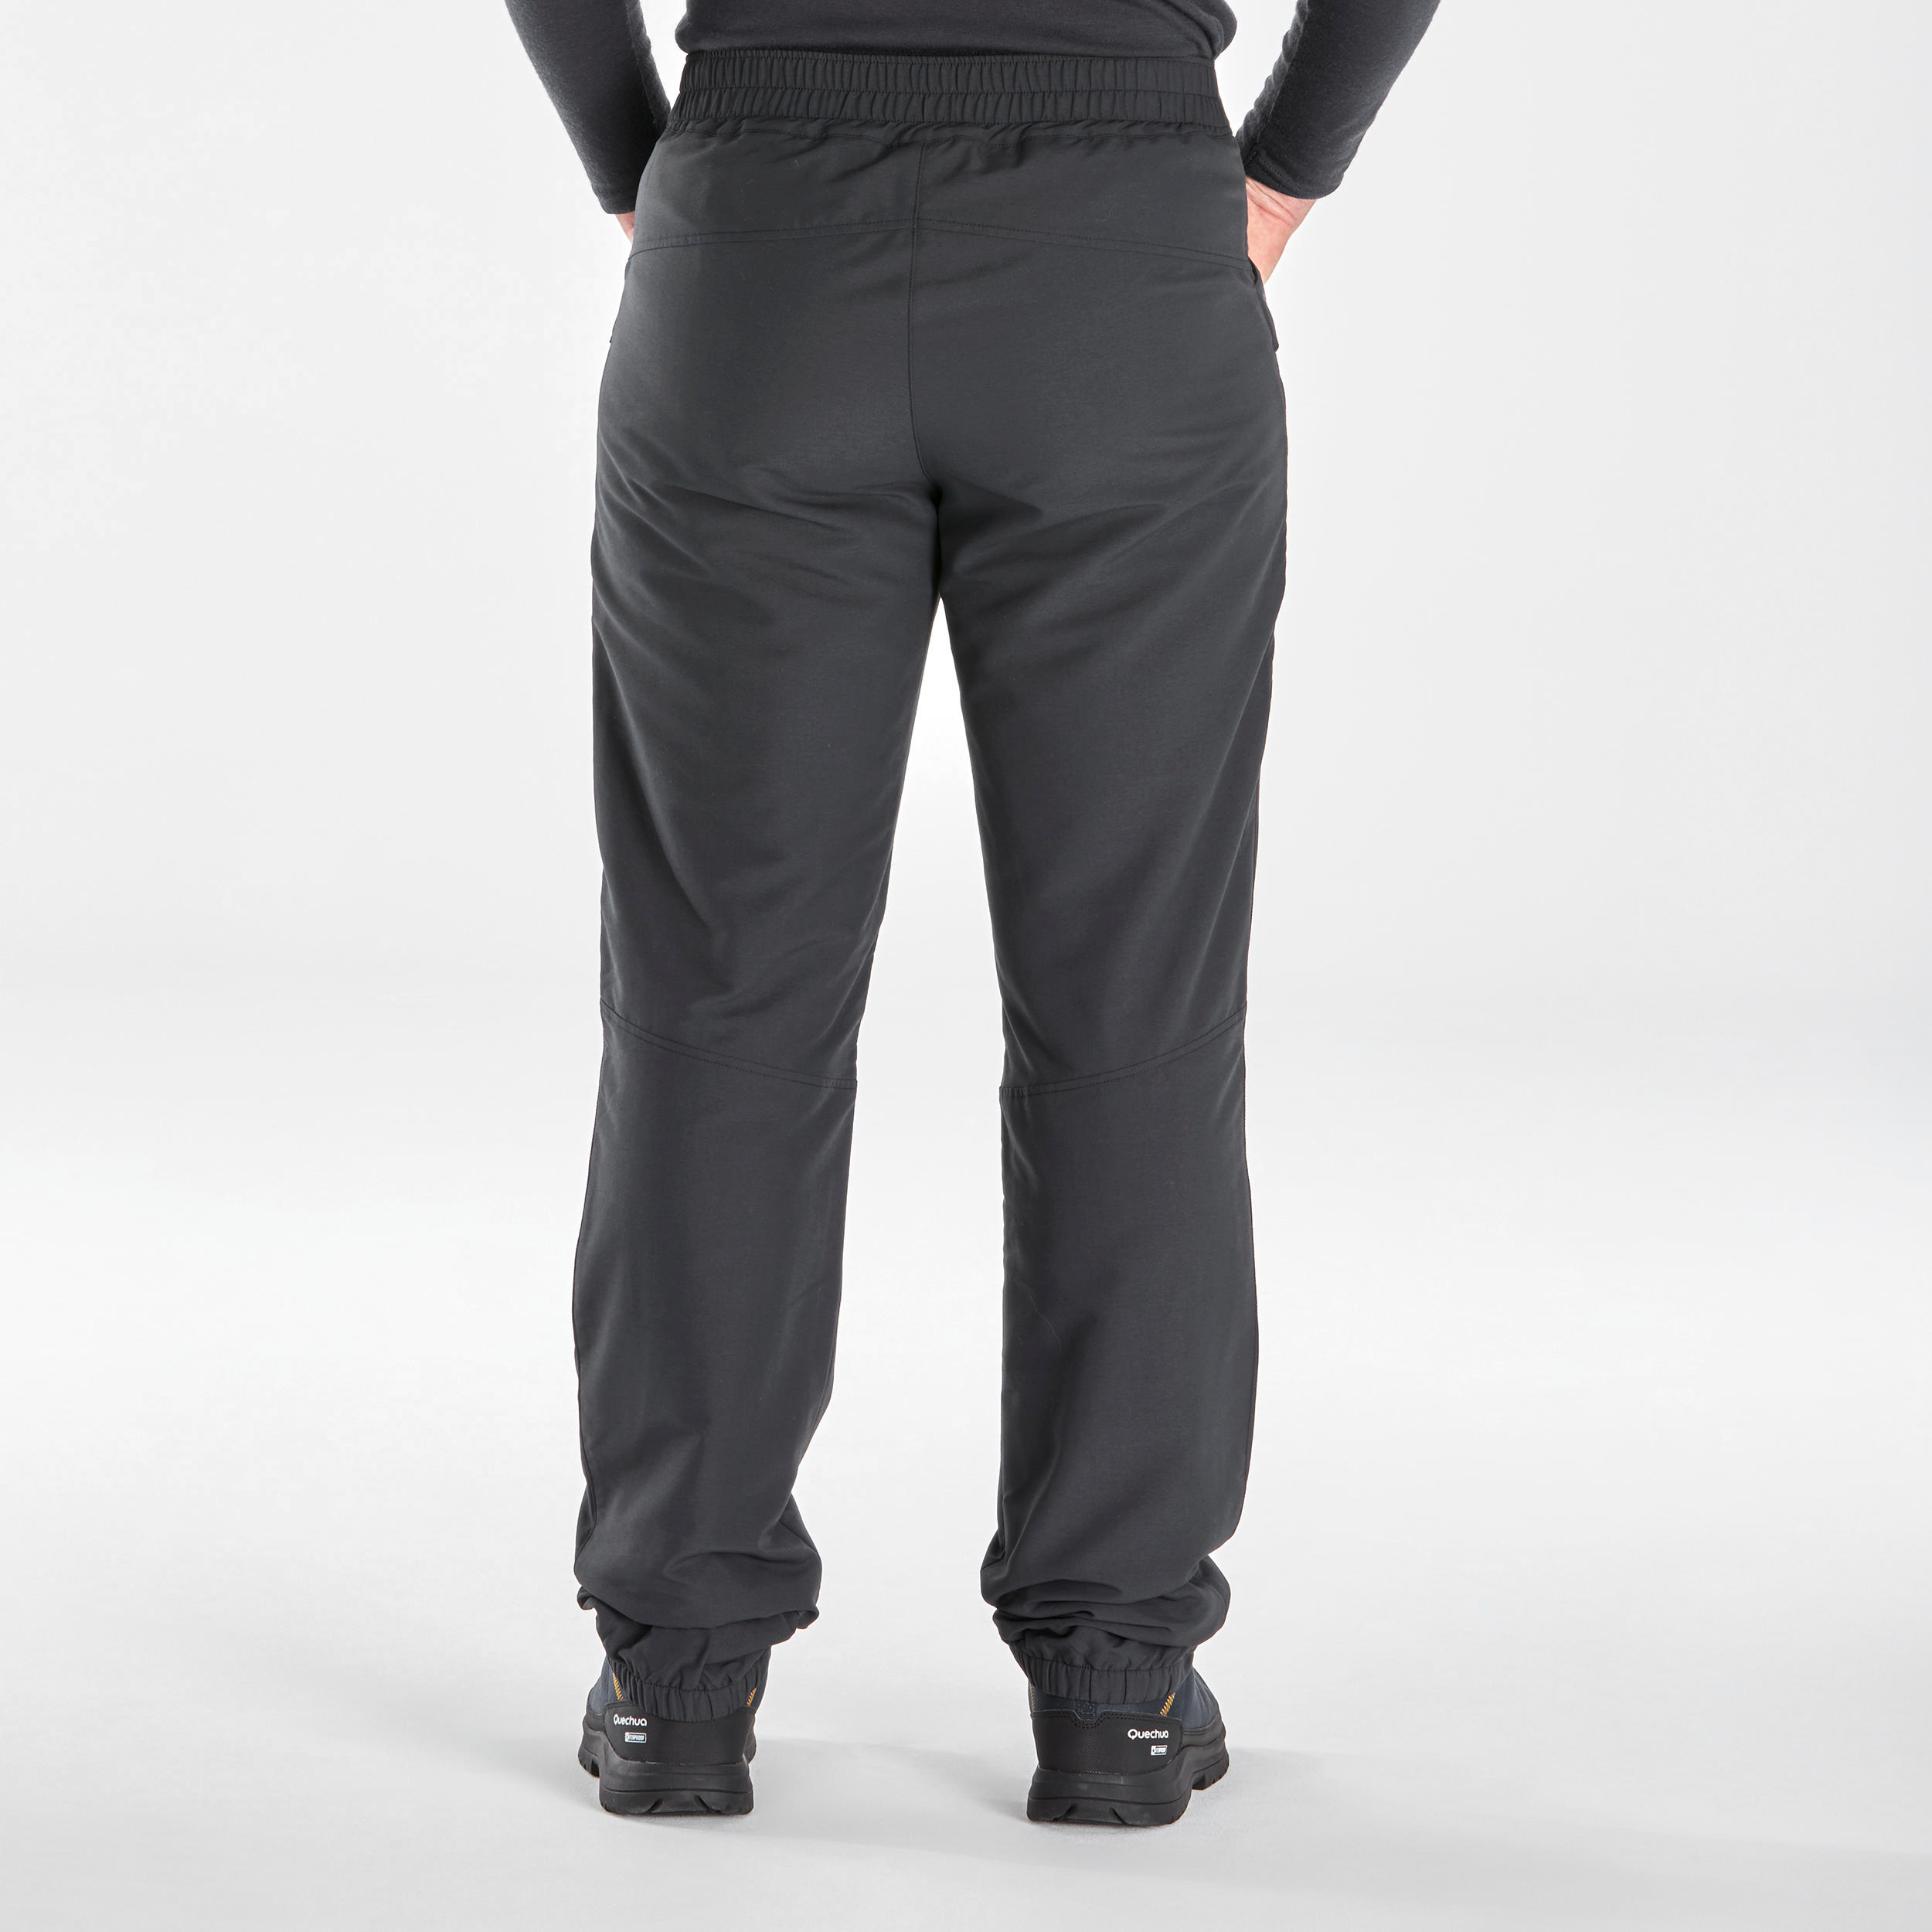 Men's Waterproof Soft Shell Pants Outdoor Hiking Fishing Fleece Pants  Trousers | eBay